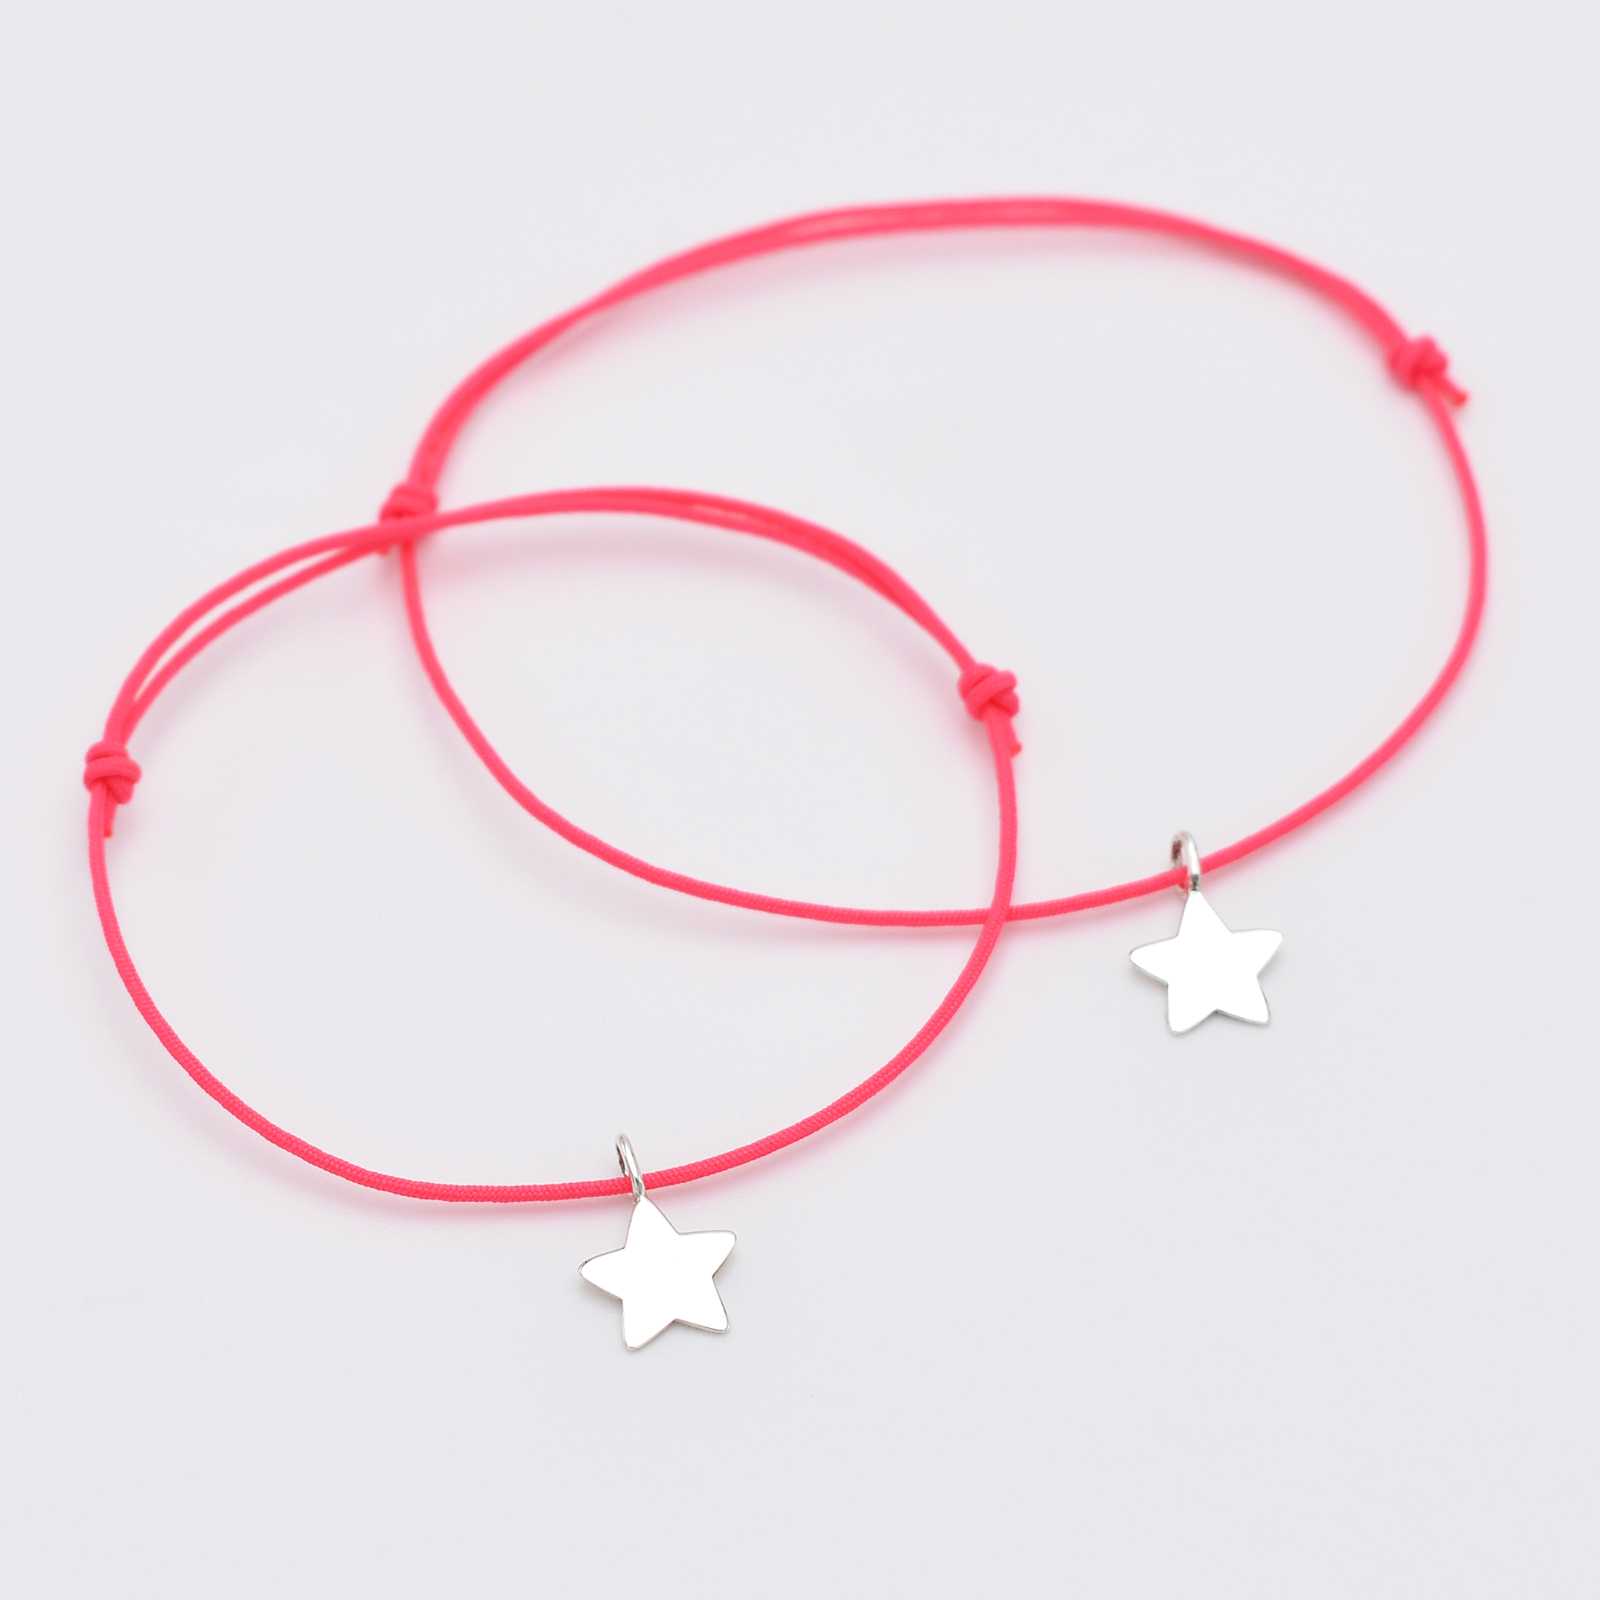 Pair of "Little star" silver bracelets